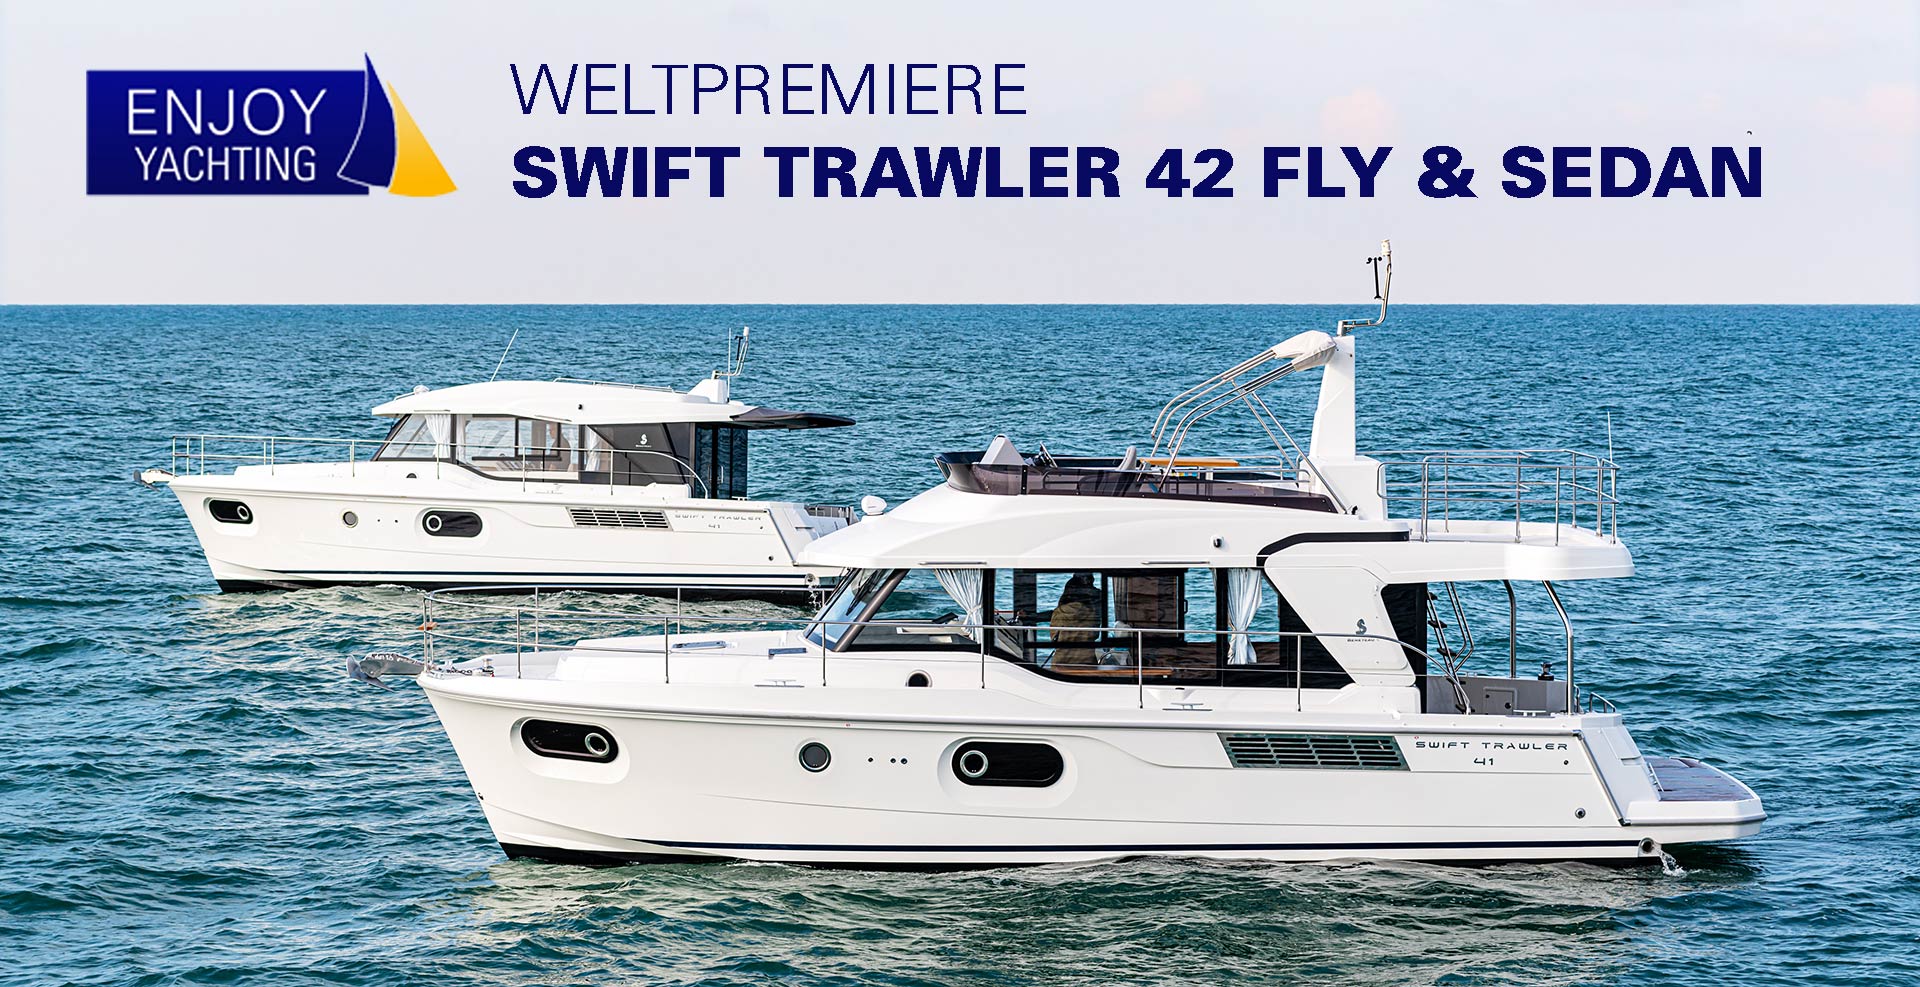 beneteau-swift-trawler-42-fly-sedan-enjoy-yachting